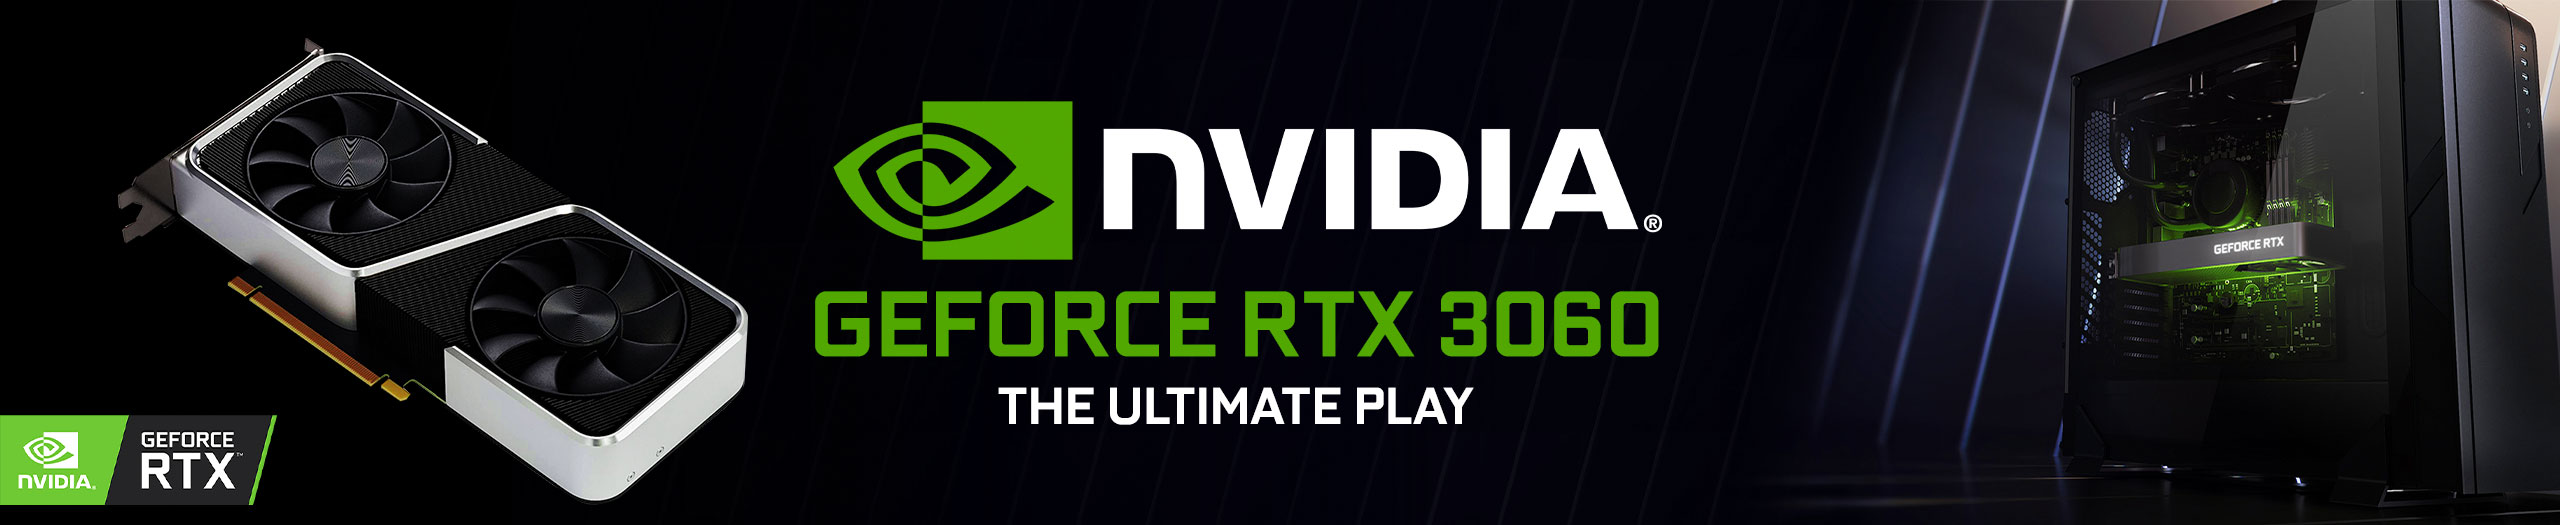 NVIDIA Geforce RTX 3060 Best Deals
